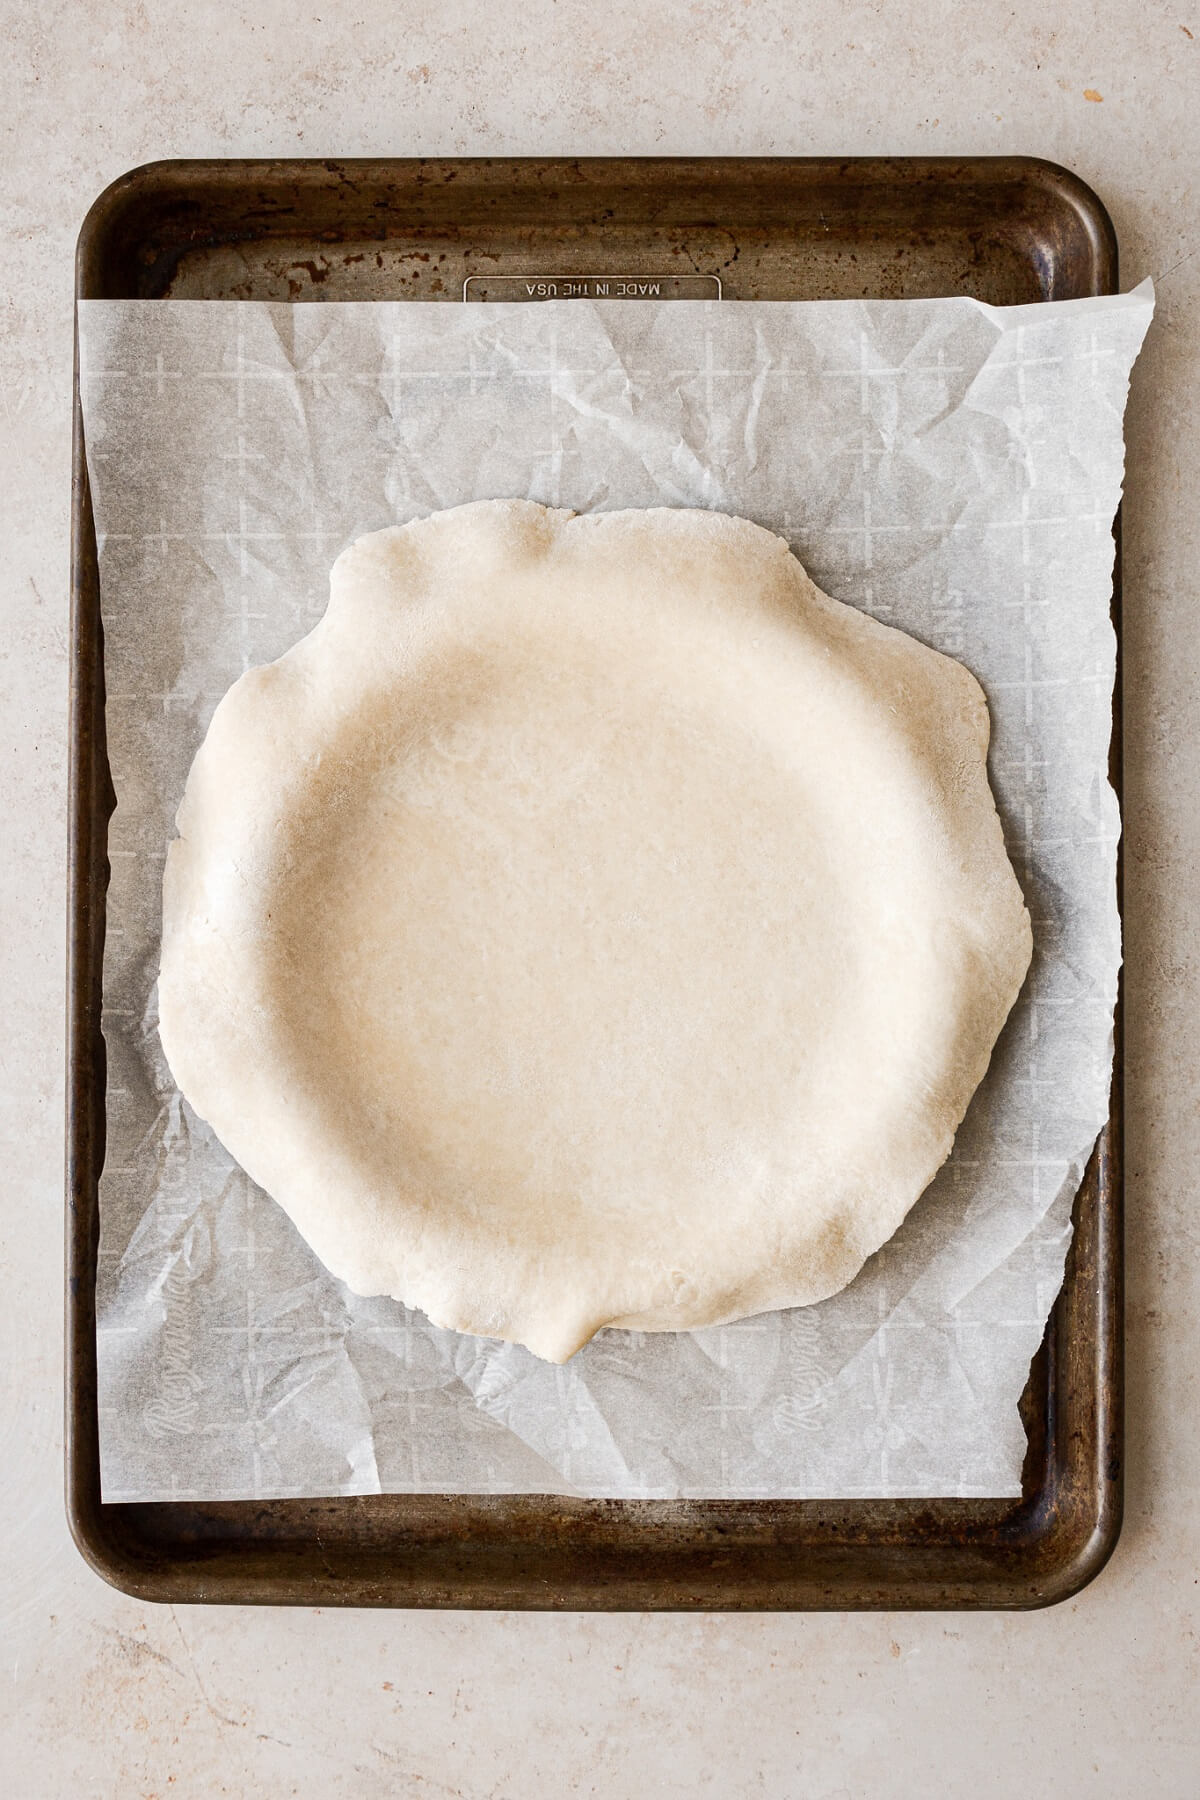 Pie dough on a baking sheet.